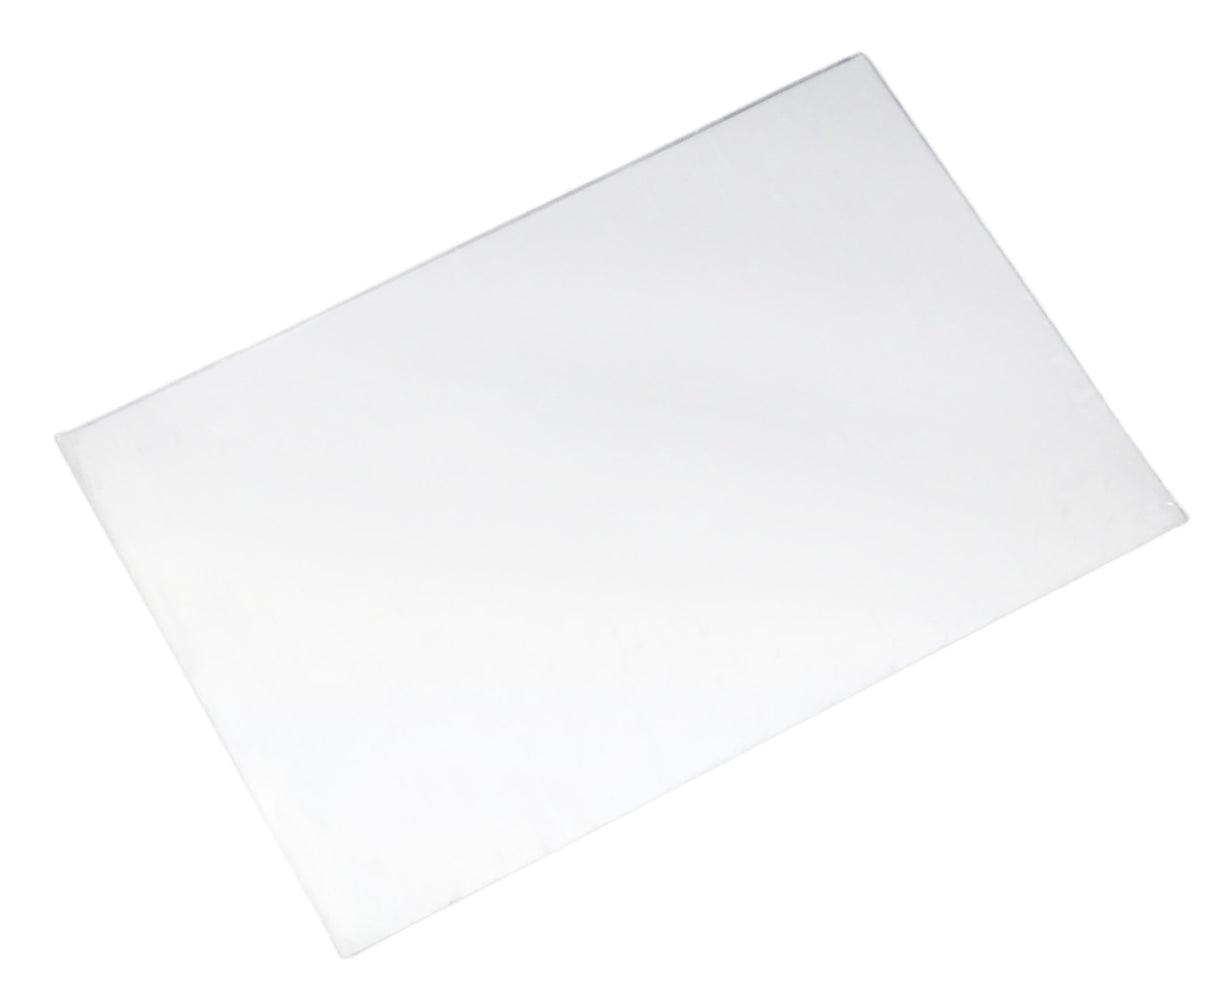 Plastic Mirror, 6 x 4 Inch - Multi Use - Reflective, Lightweight - Eisco Labs